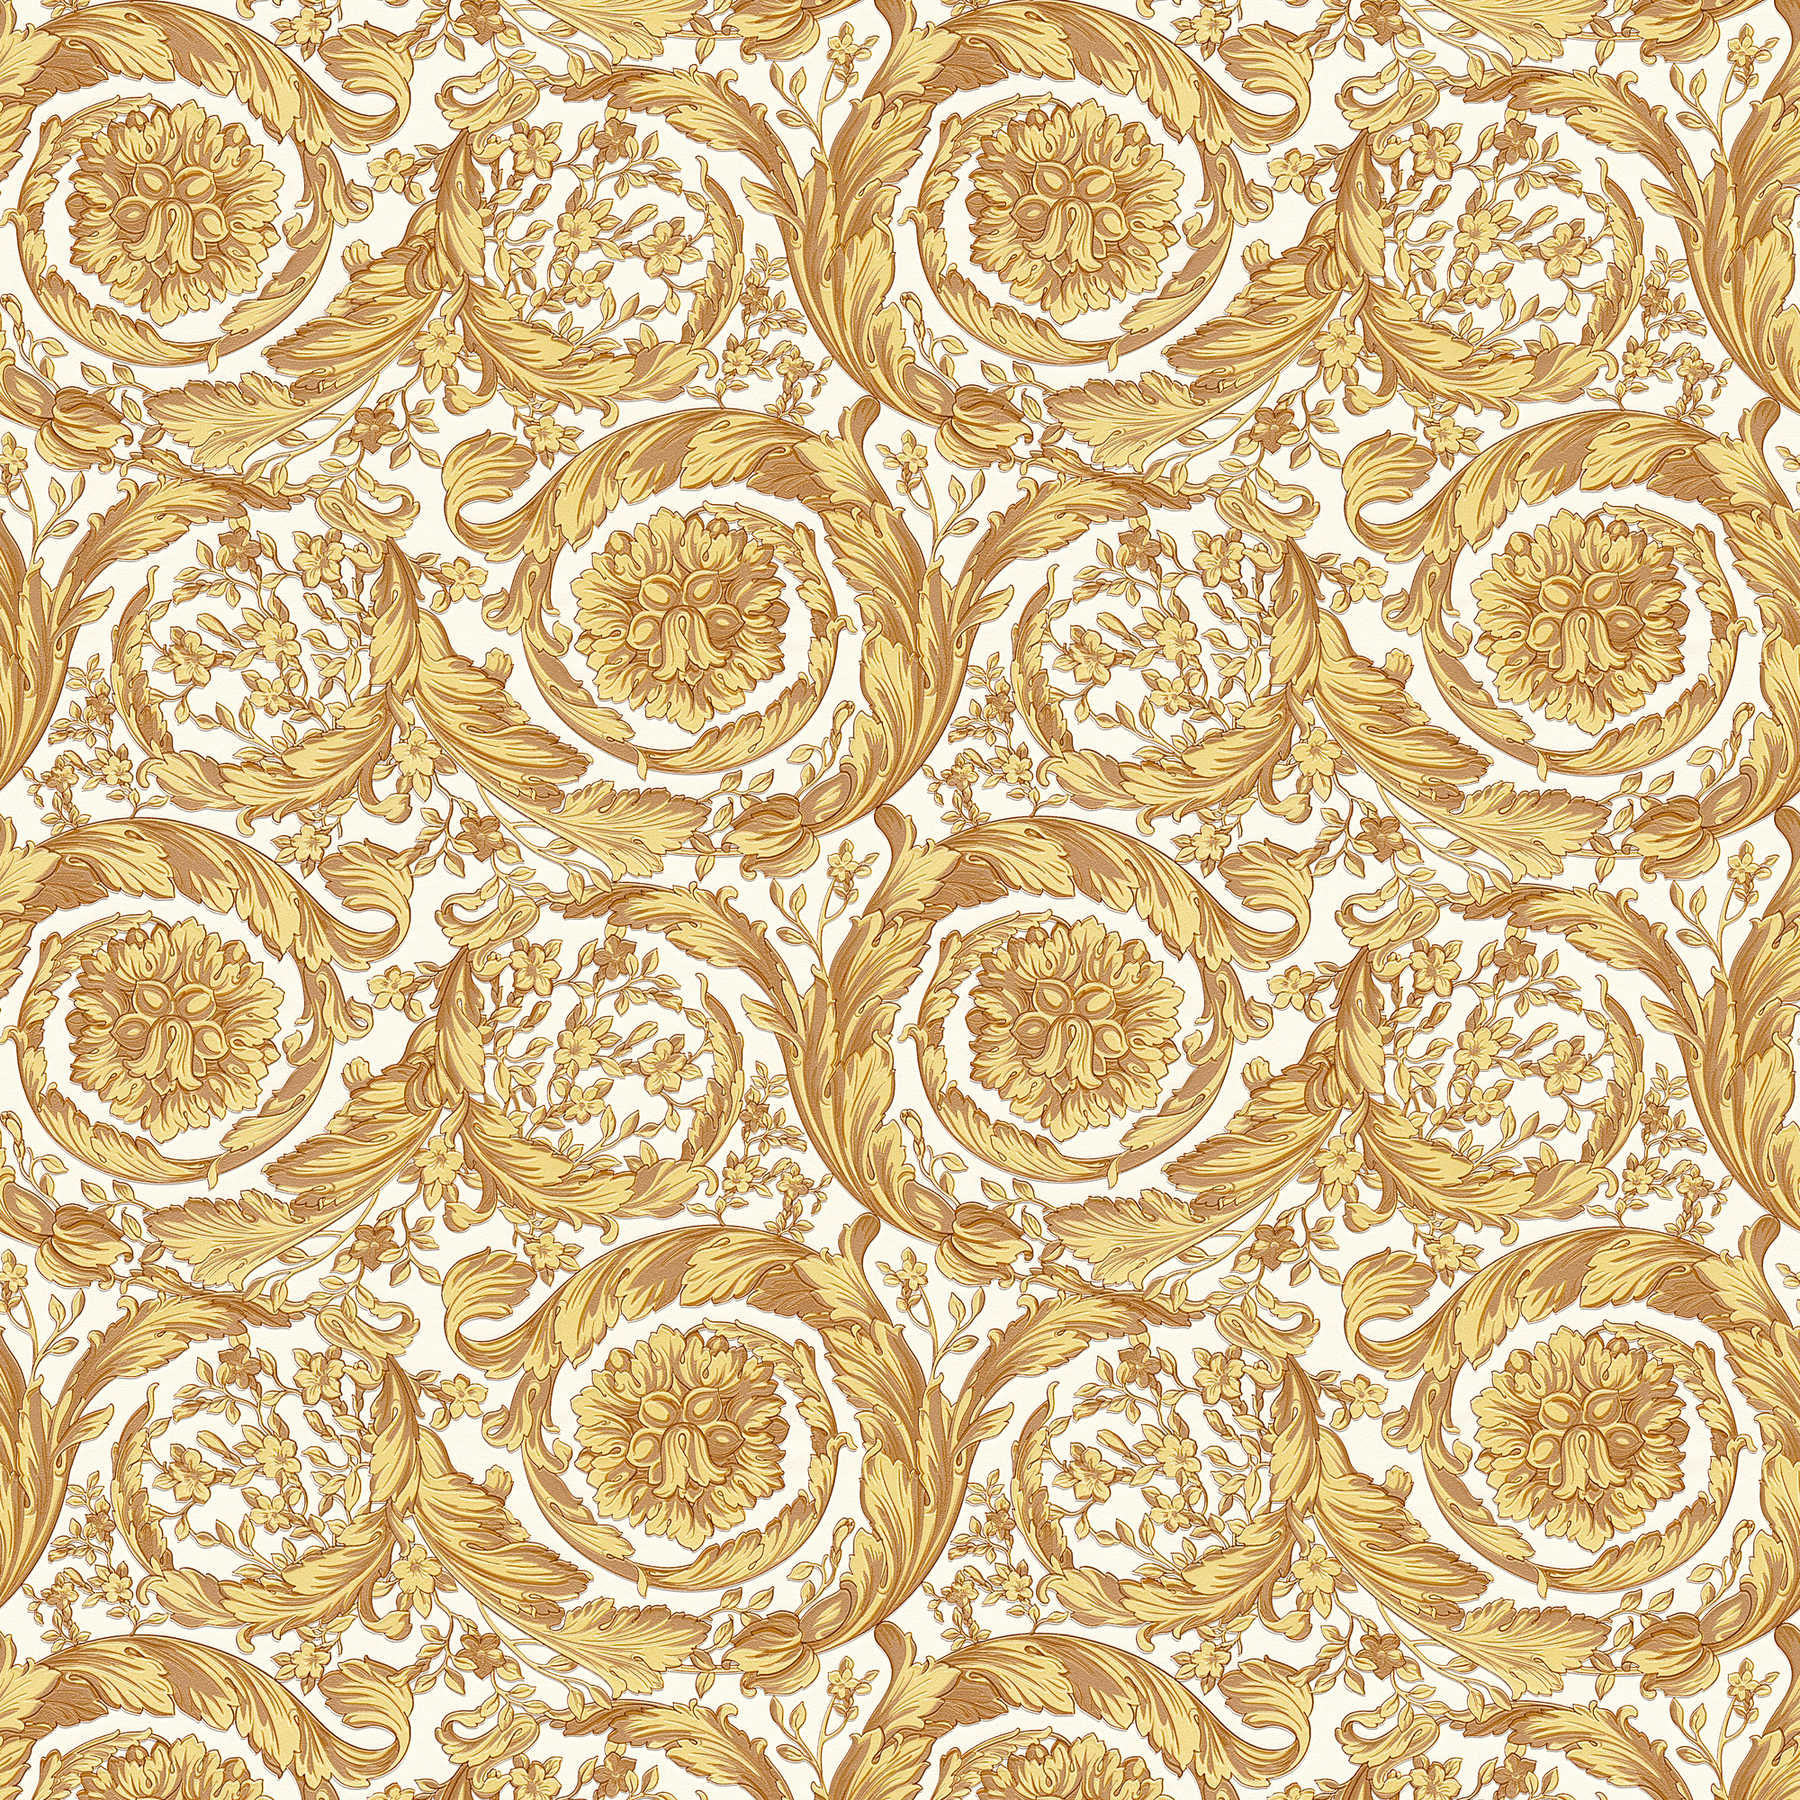 VERSACE behang met bloemenpatroon - goud, geel, beige
